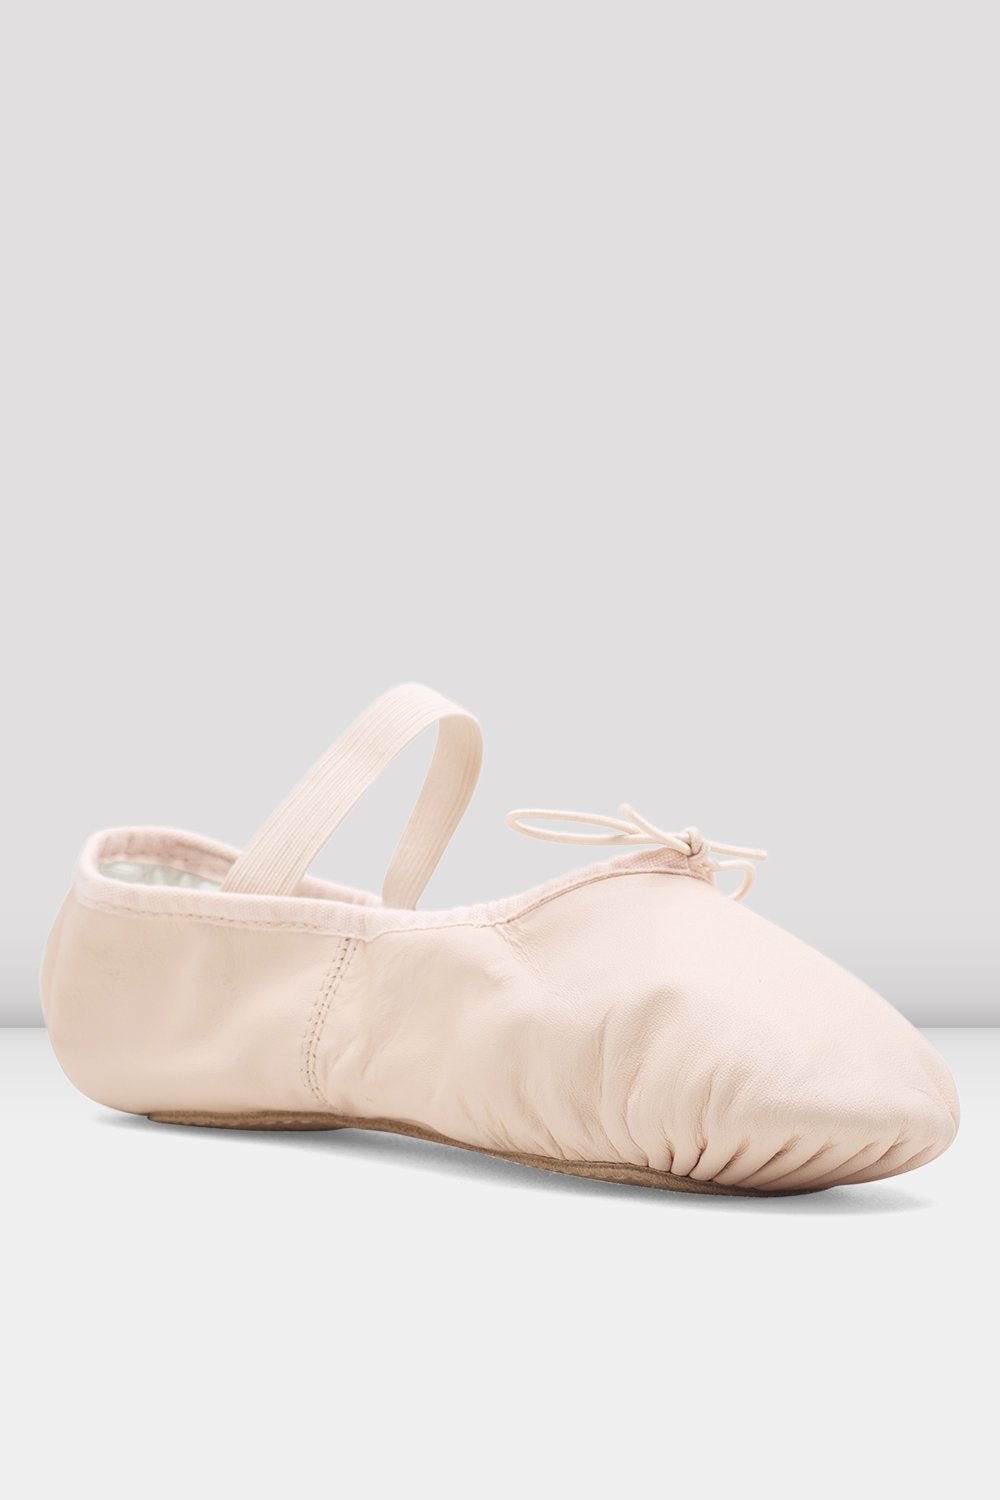 shoes — DANCERS BARRE